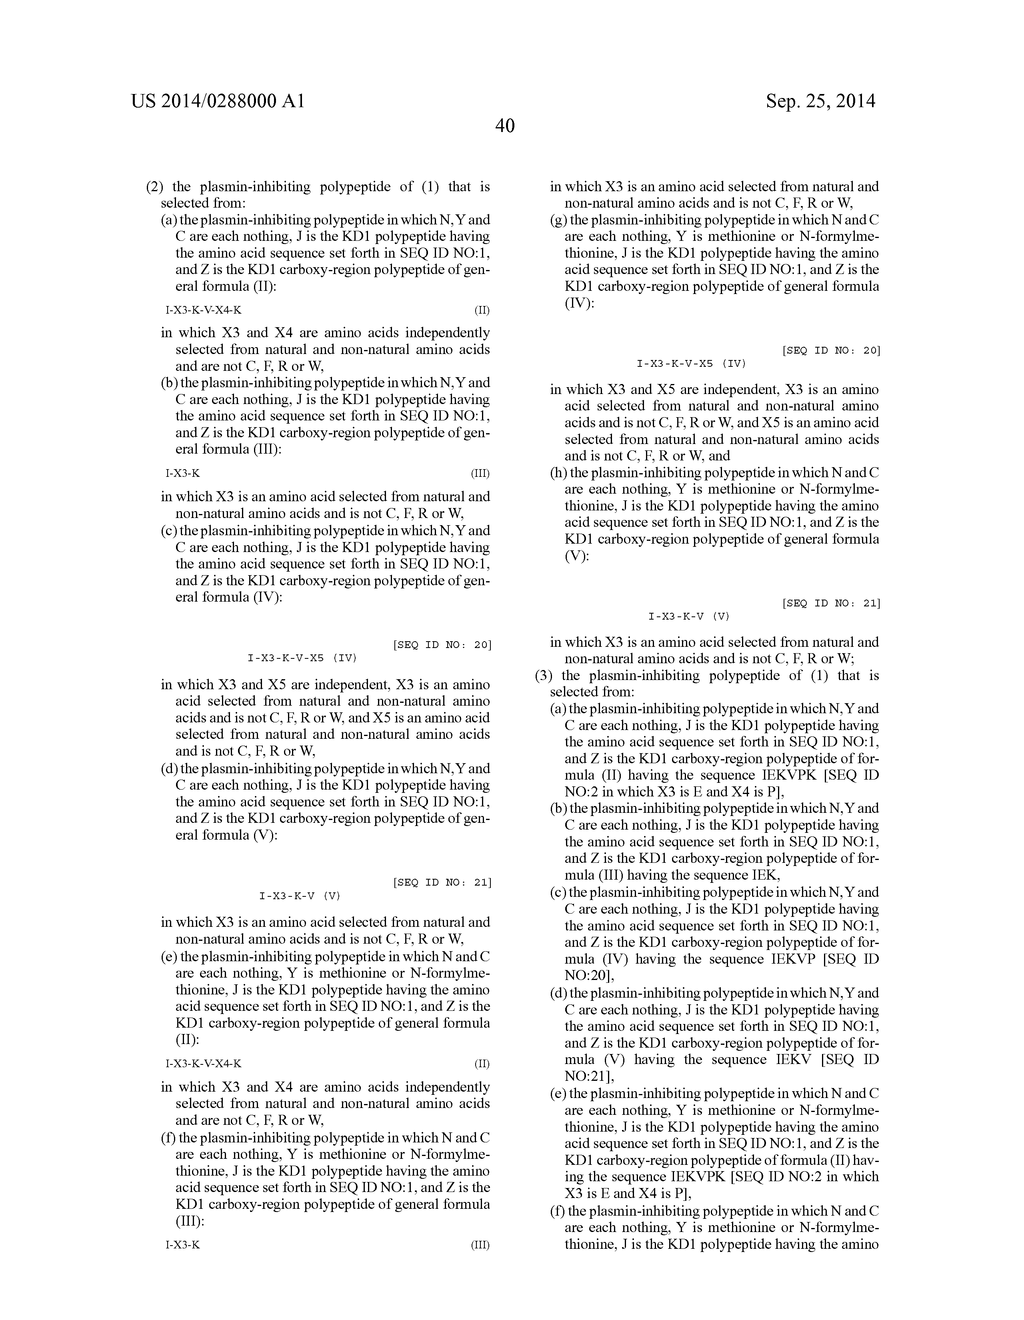 DUAL REACTIVITY POTENT KUNITZ INHIBITOR OF FIBRINOLYSIS - diagram, schematic, and image 47